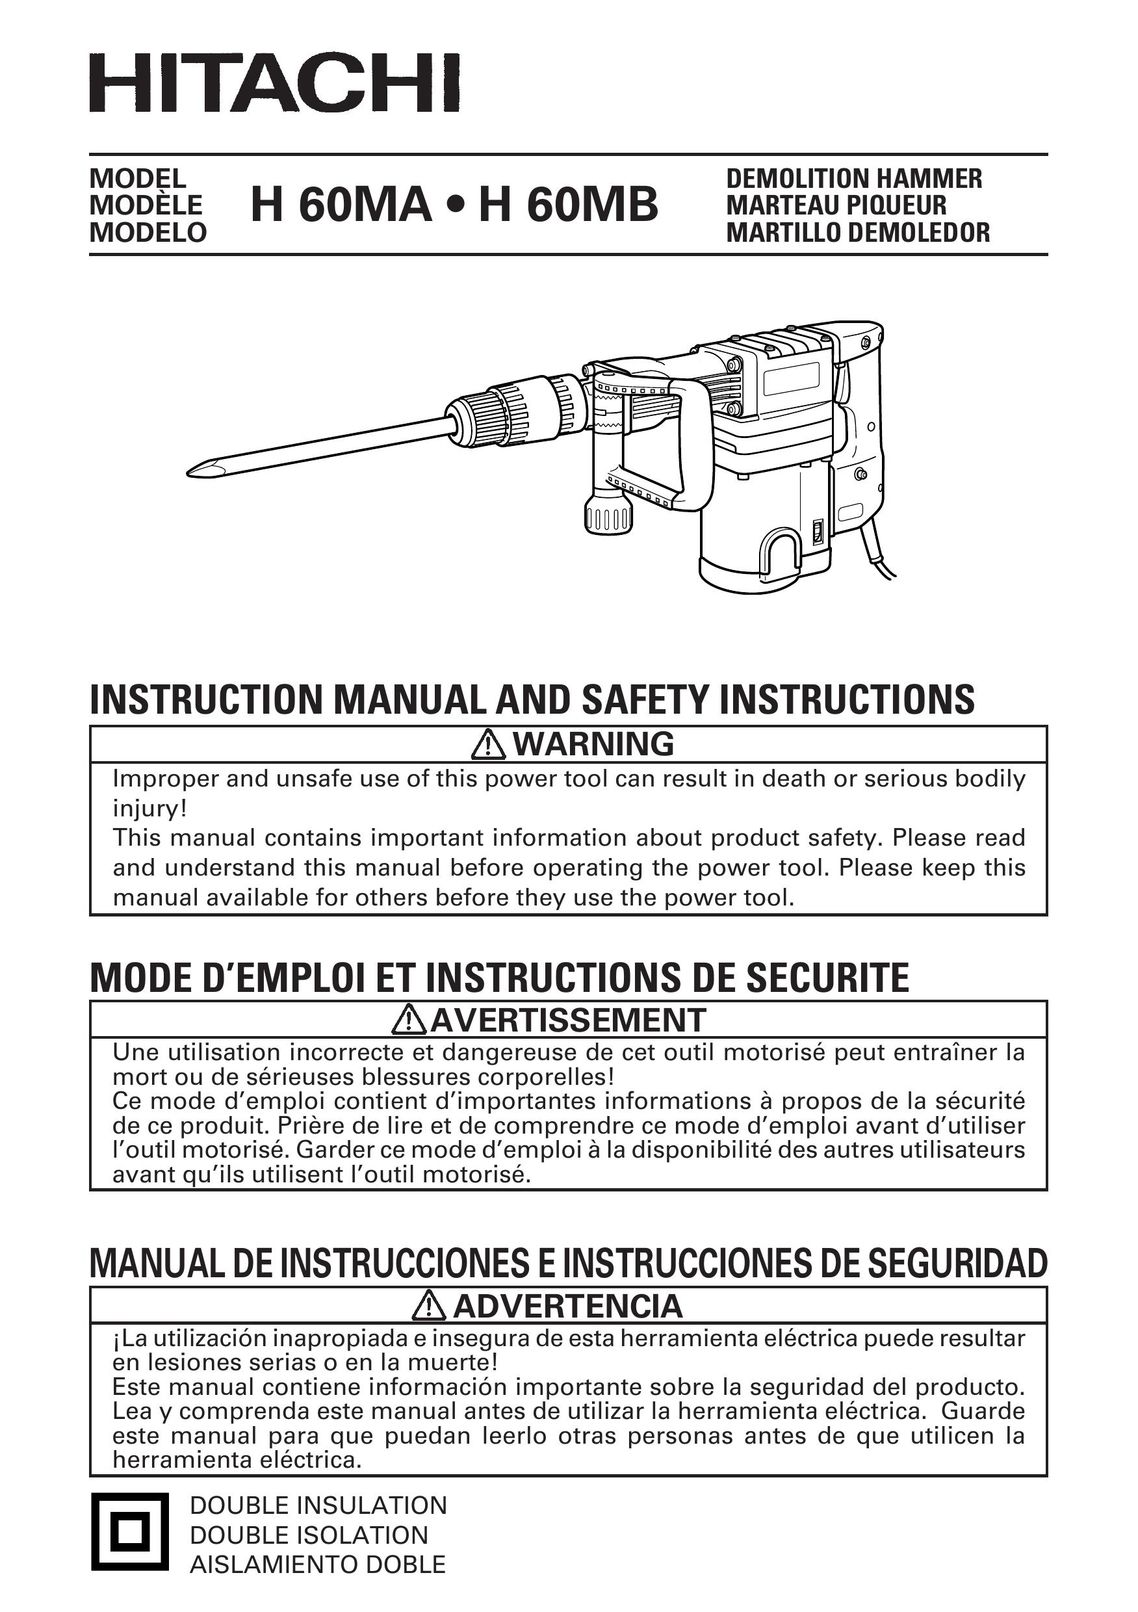 Hitachi H 60MA . H 60MB Power Hammer User Manual